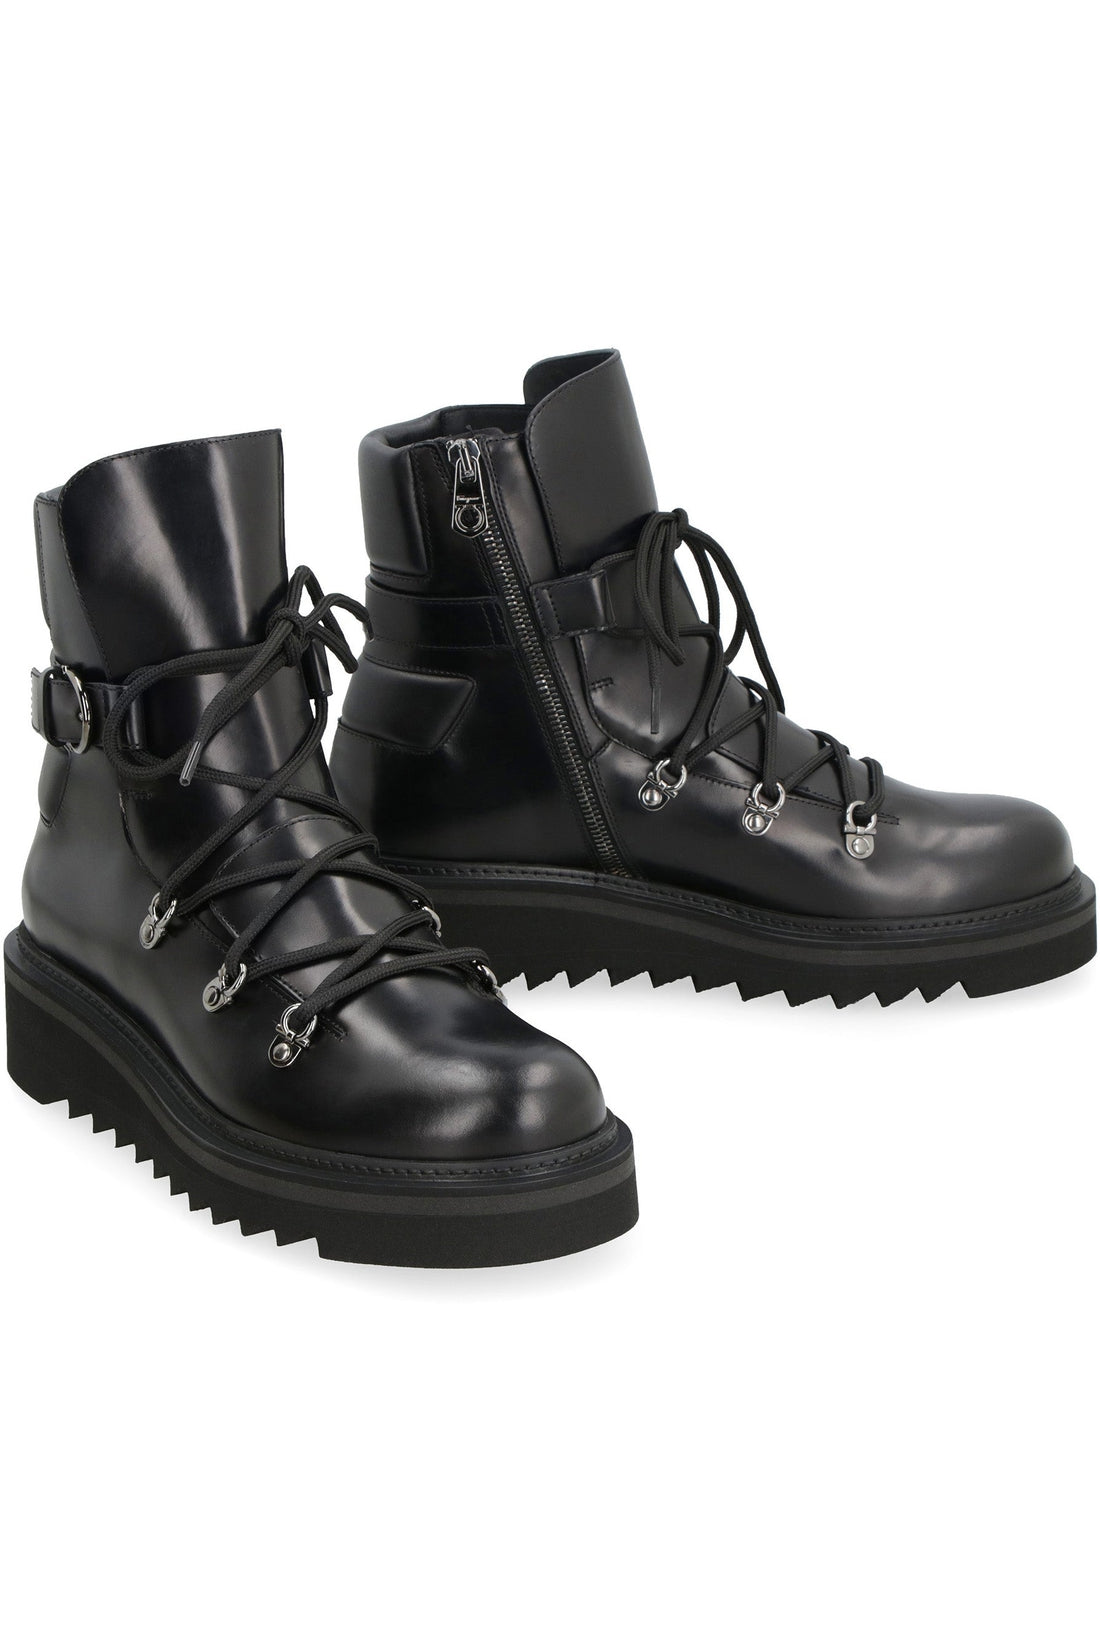 Salvatore Ferragamo-OUTLET-SALE-Elimo leather ankle boots-ARCHIVIST